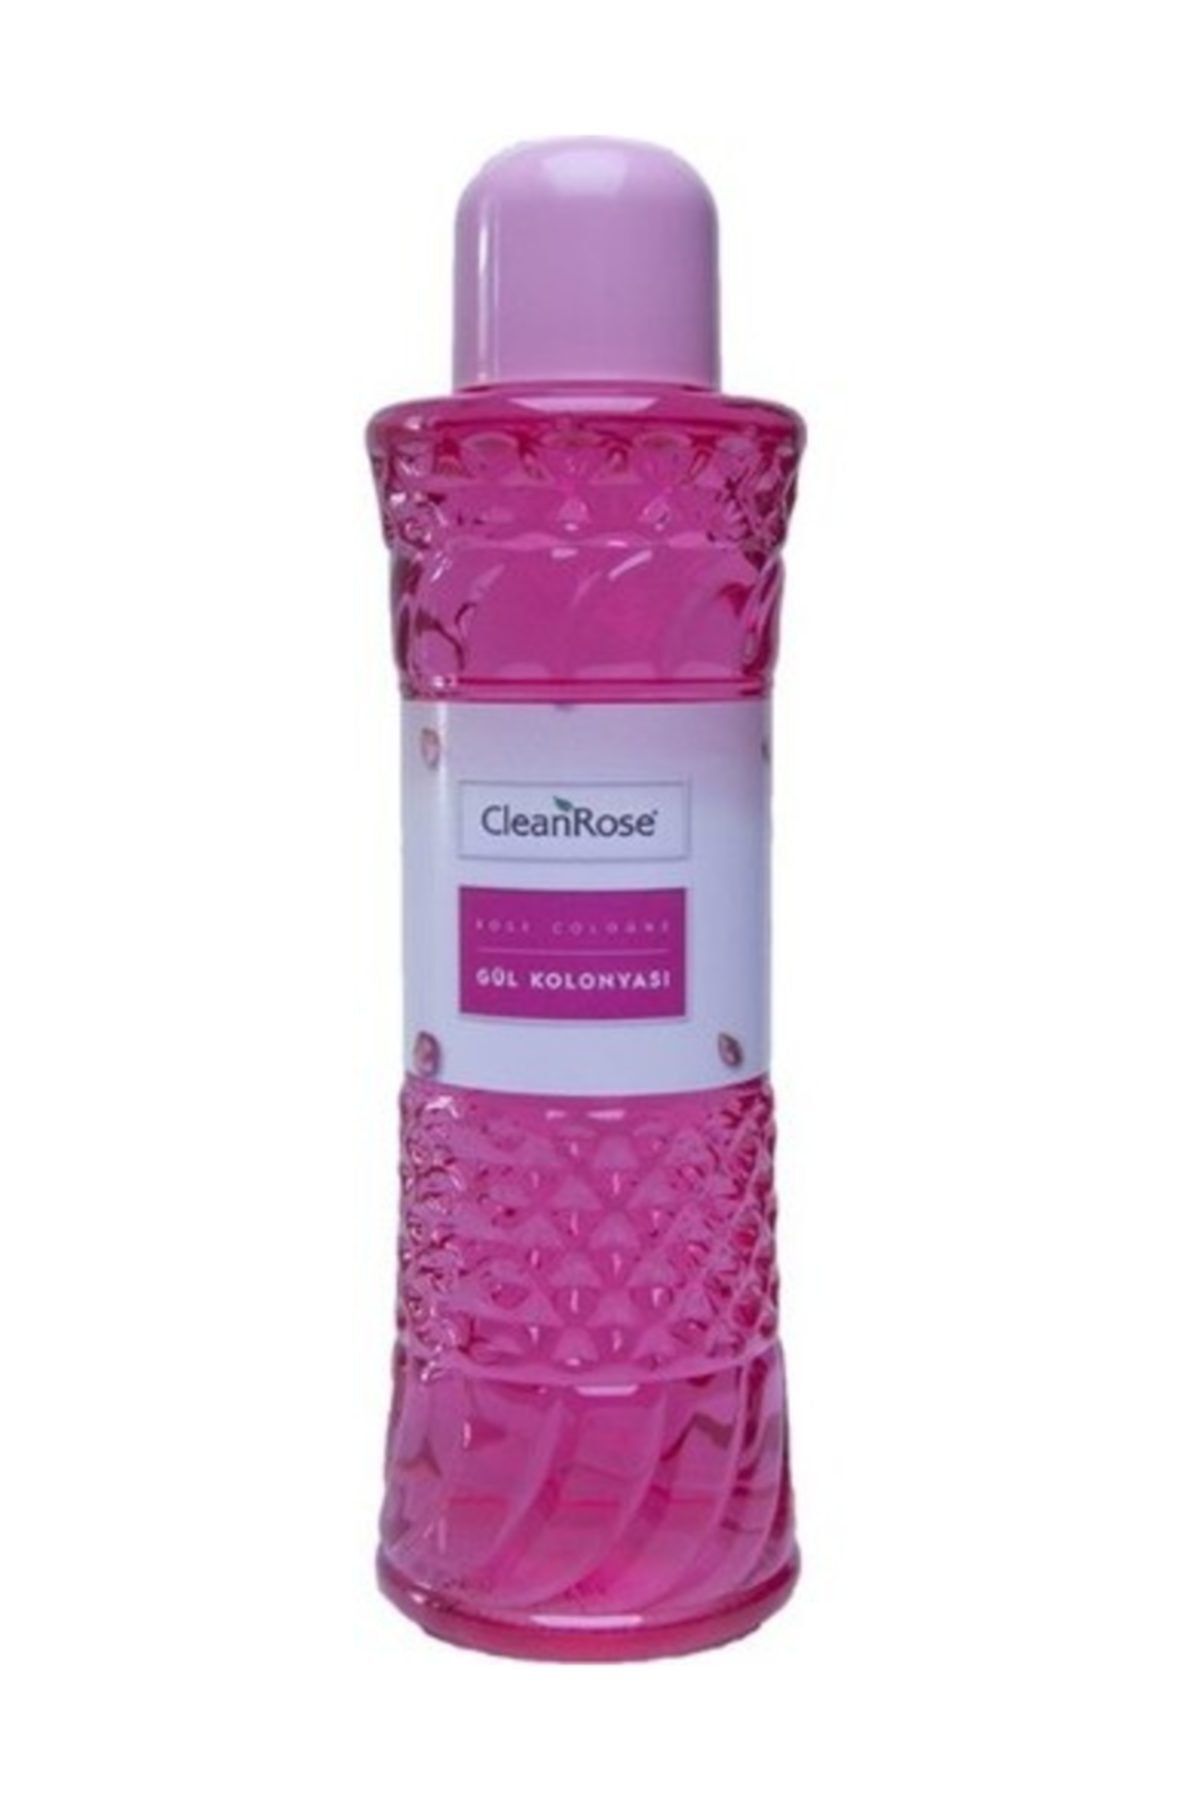 Clean Rose Cleanrose Kalıcı Isparta Gül Kolonyası 250 ml